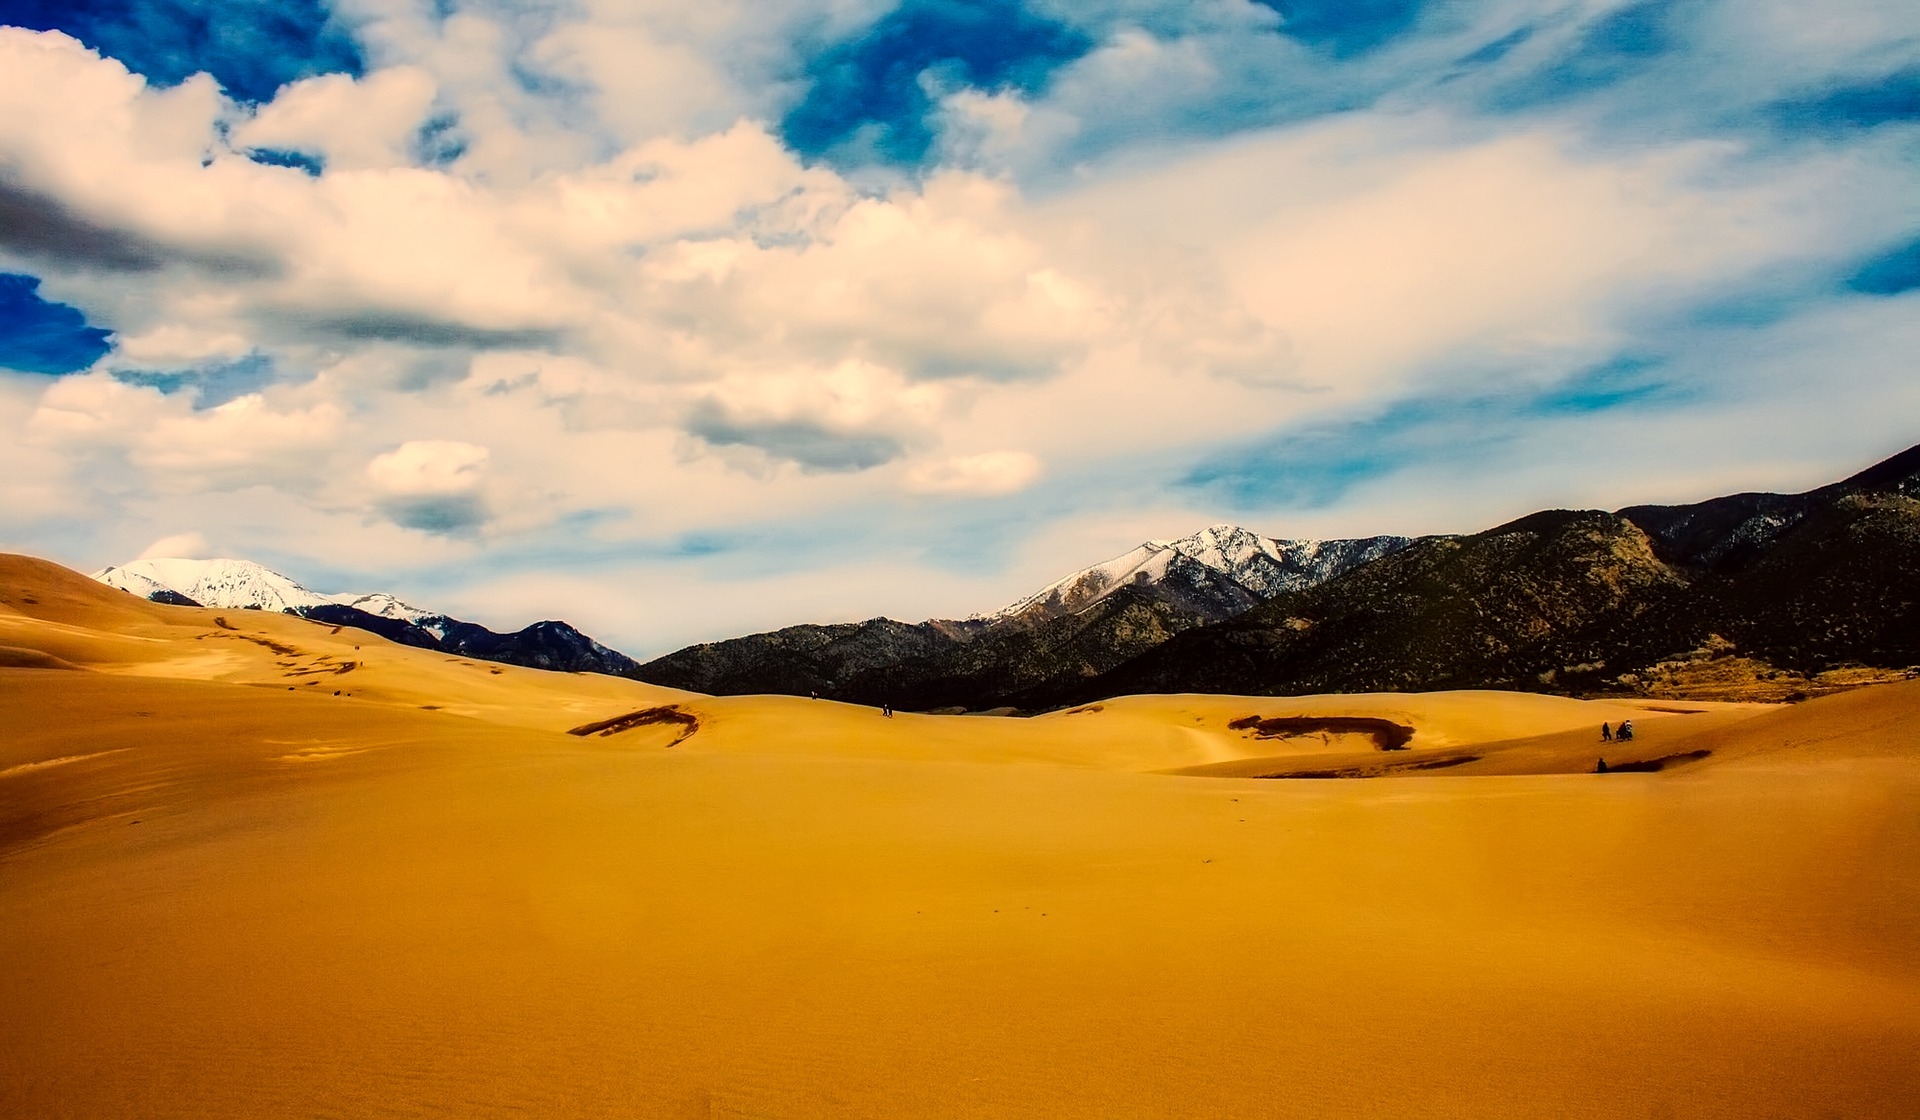 https://pixabay.com/hu/sivatag-fekv%C5%91-hegyek-sand-dunes-2674415/